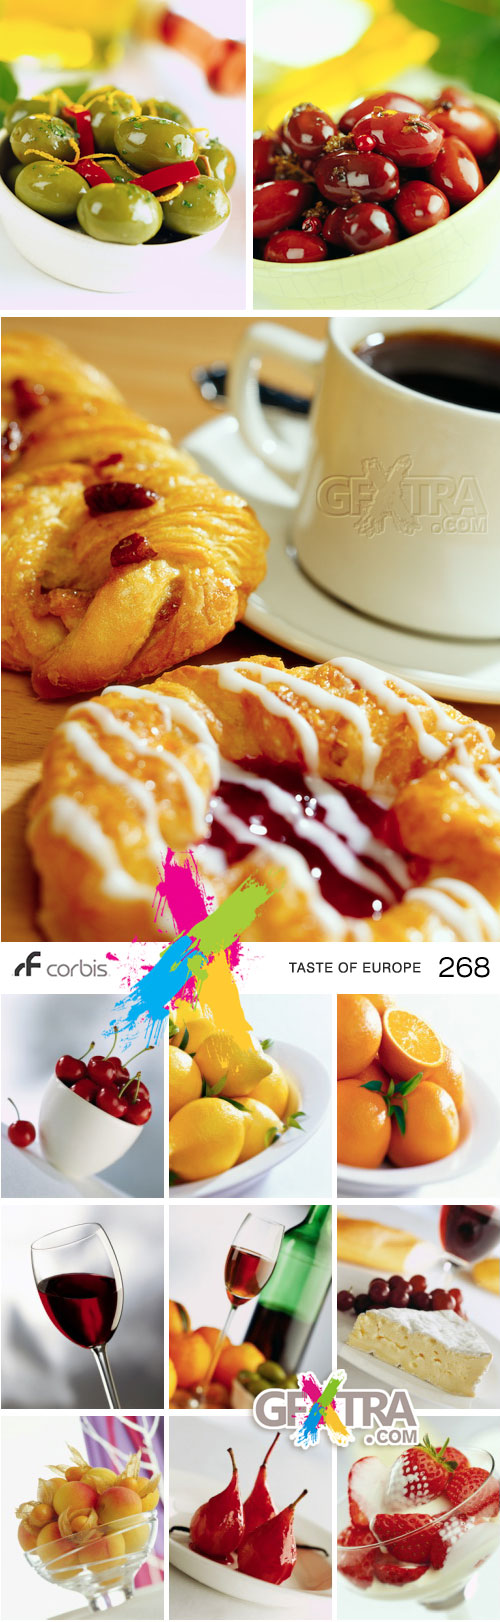 Corbis CB0268 Taste of Europe